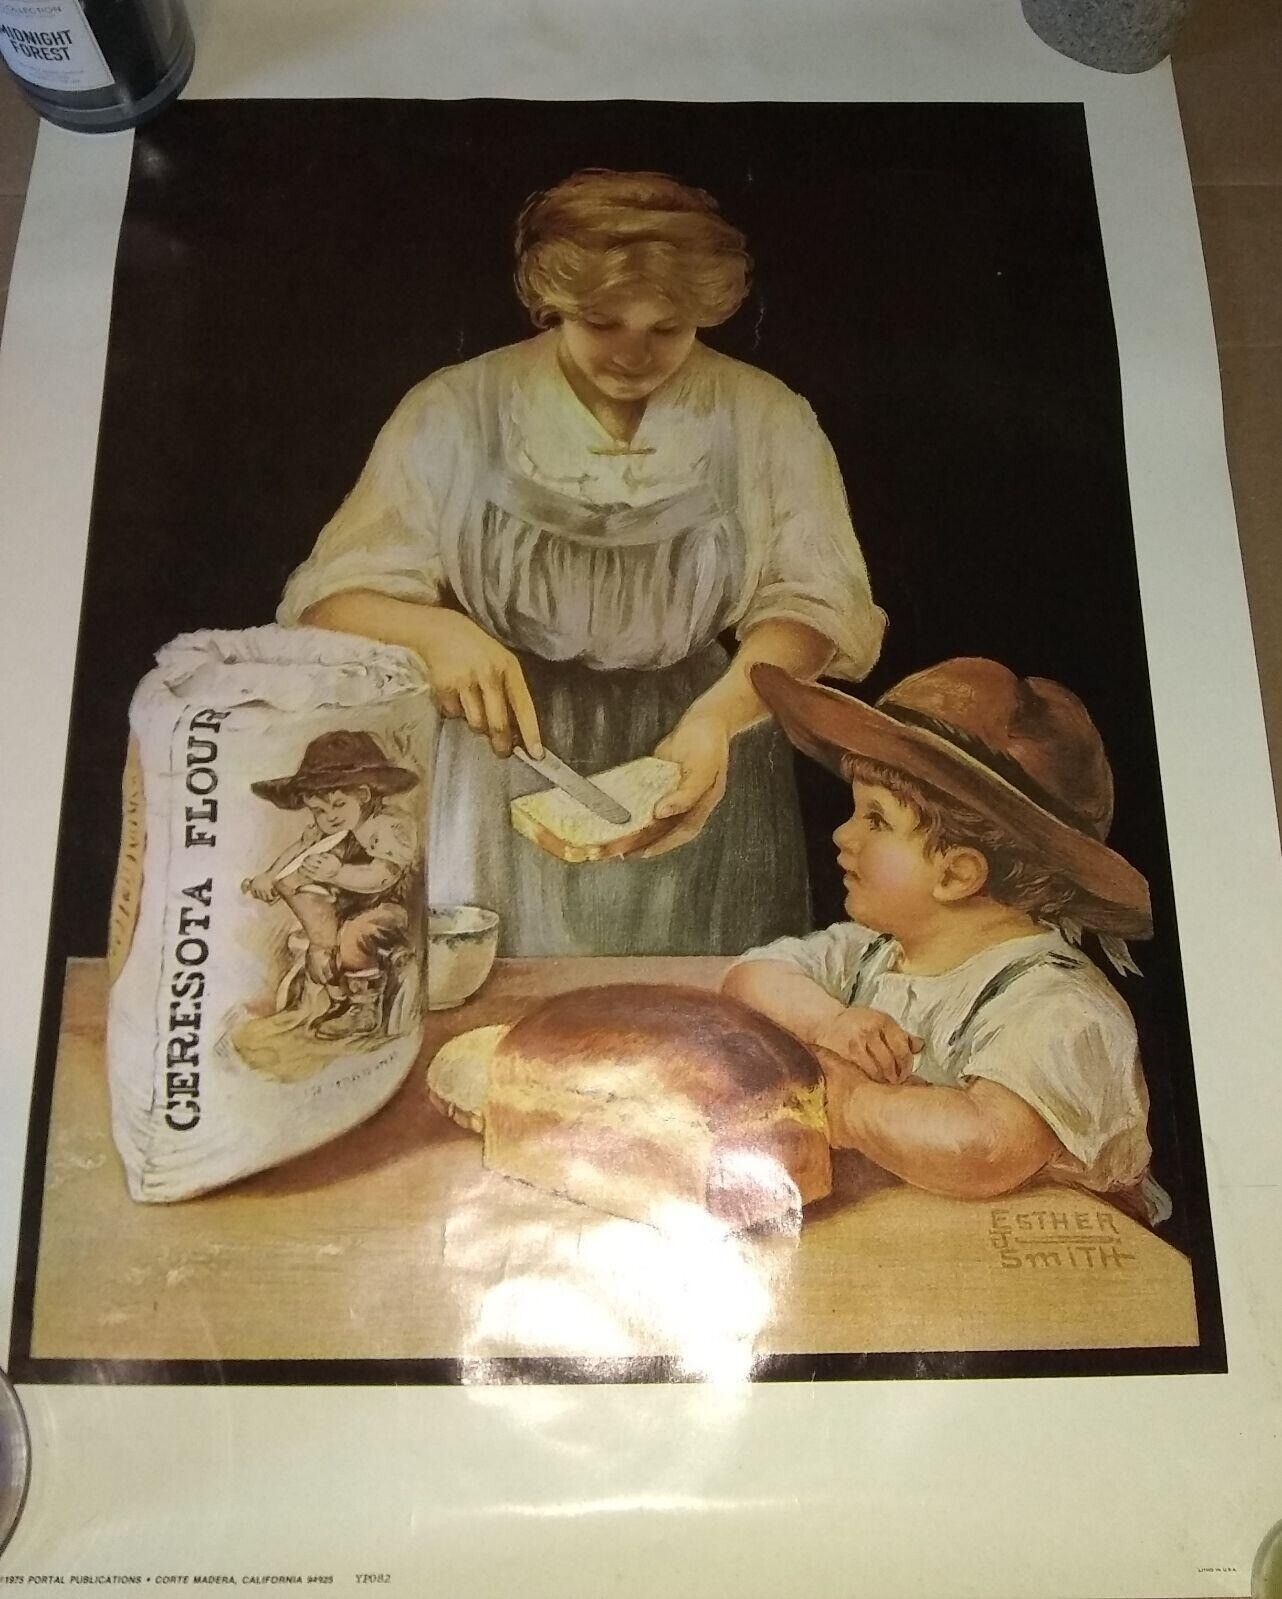 Vintage Ceresota Flour Company Ad Poster